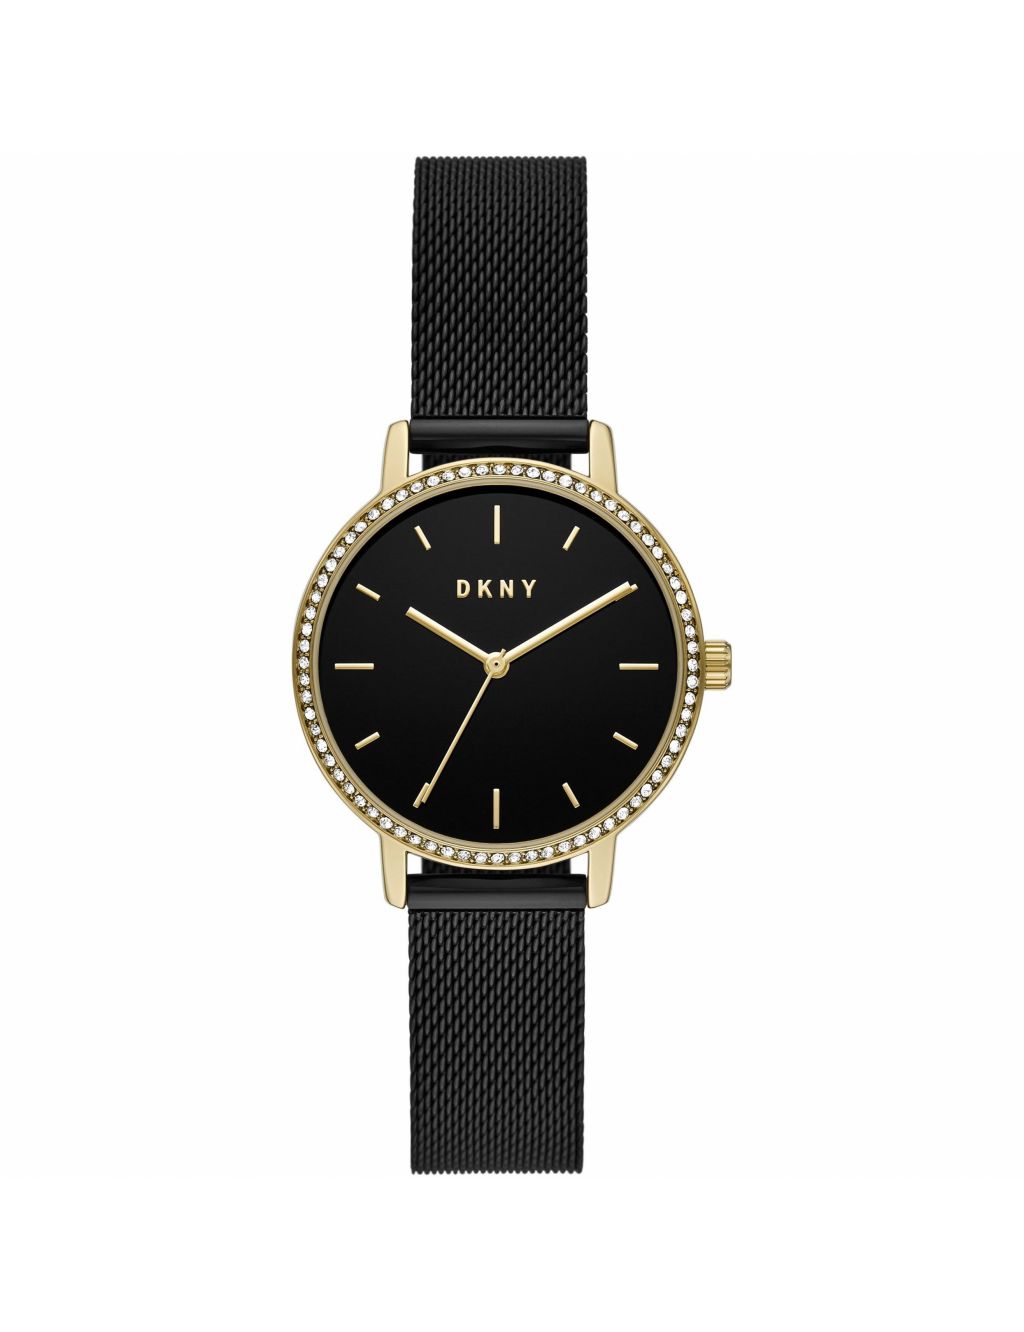 DKNY The Modernist Black Watch image 1